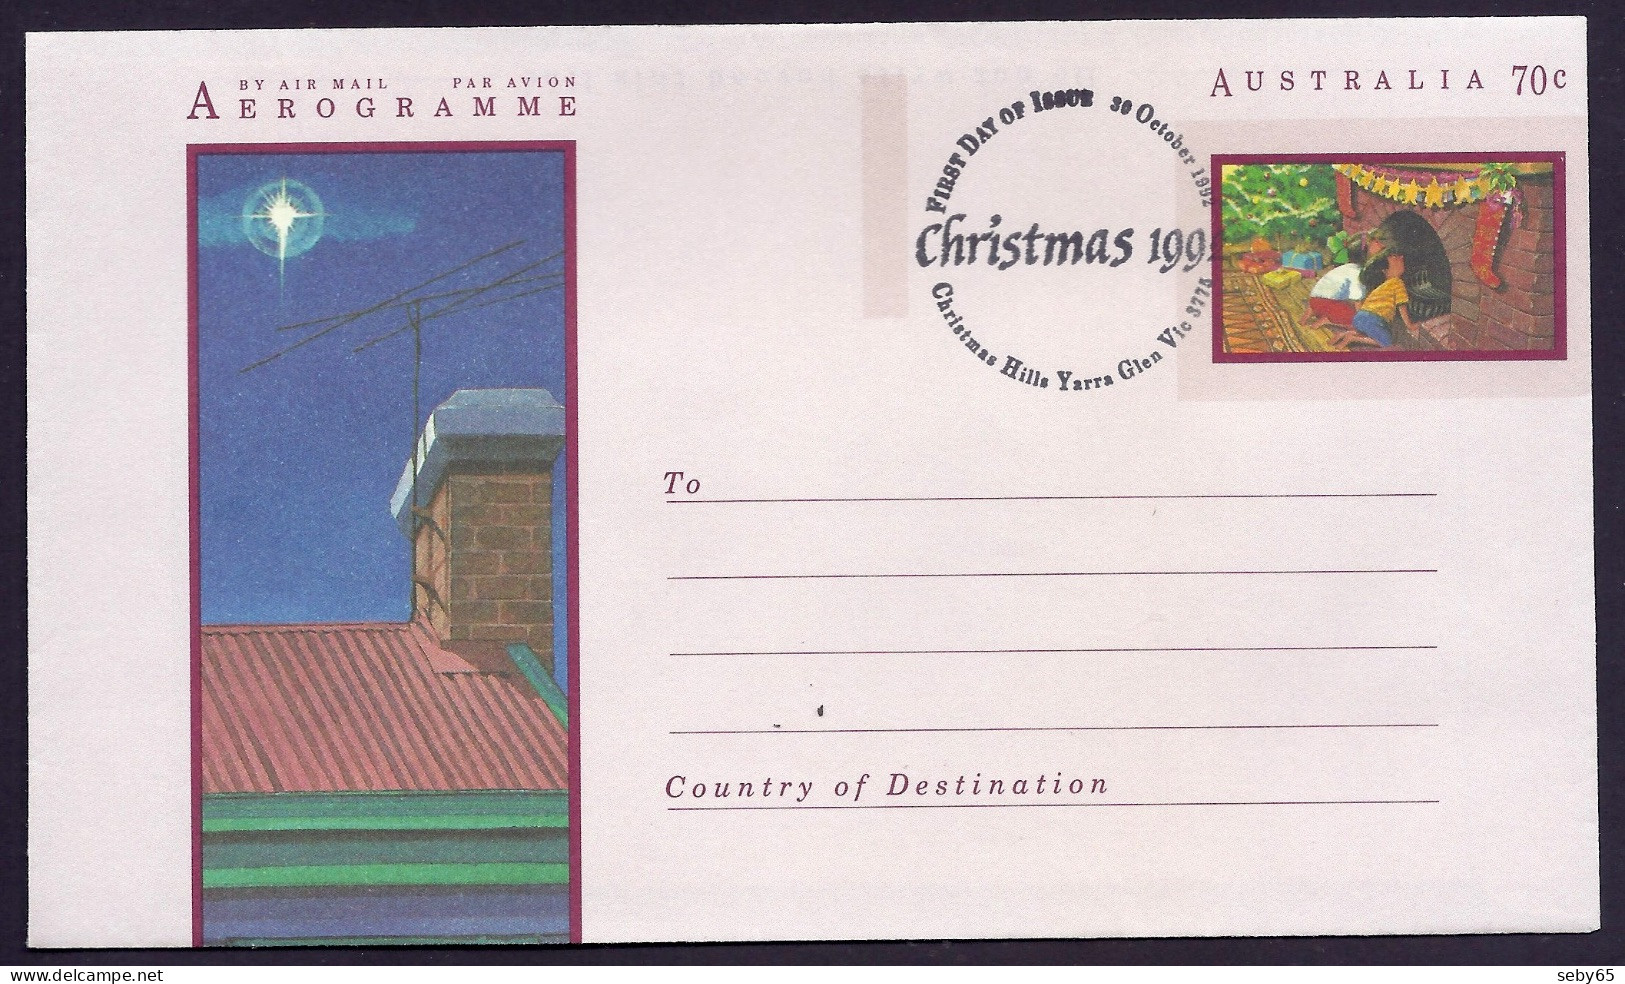 Australia 1992 Aerogramme - Christmas, Noel, Natale, Nativity, 70c - FDC Postmark - Aerogramas